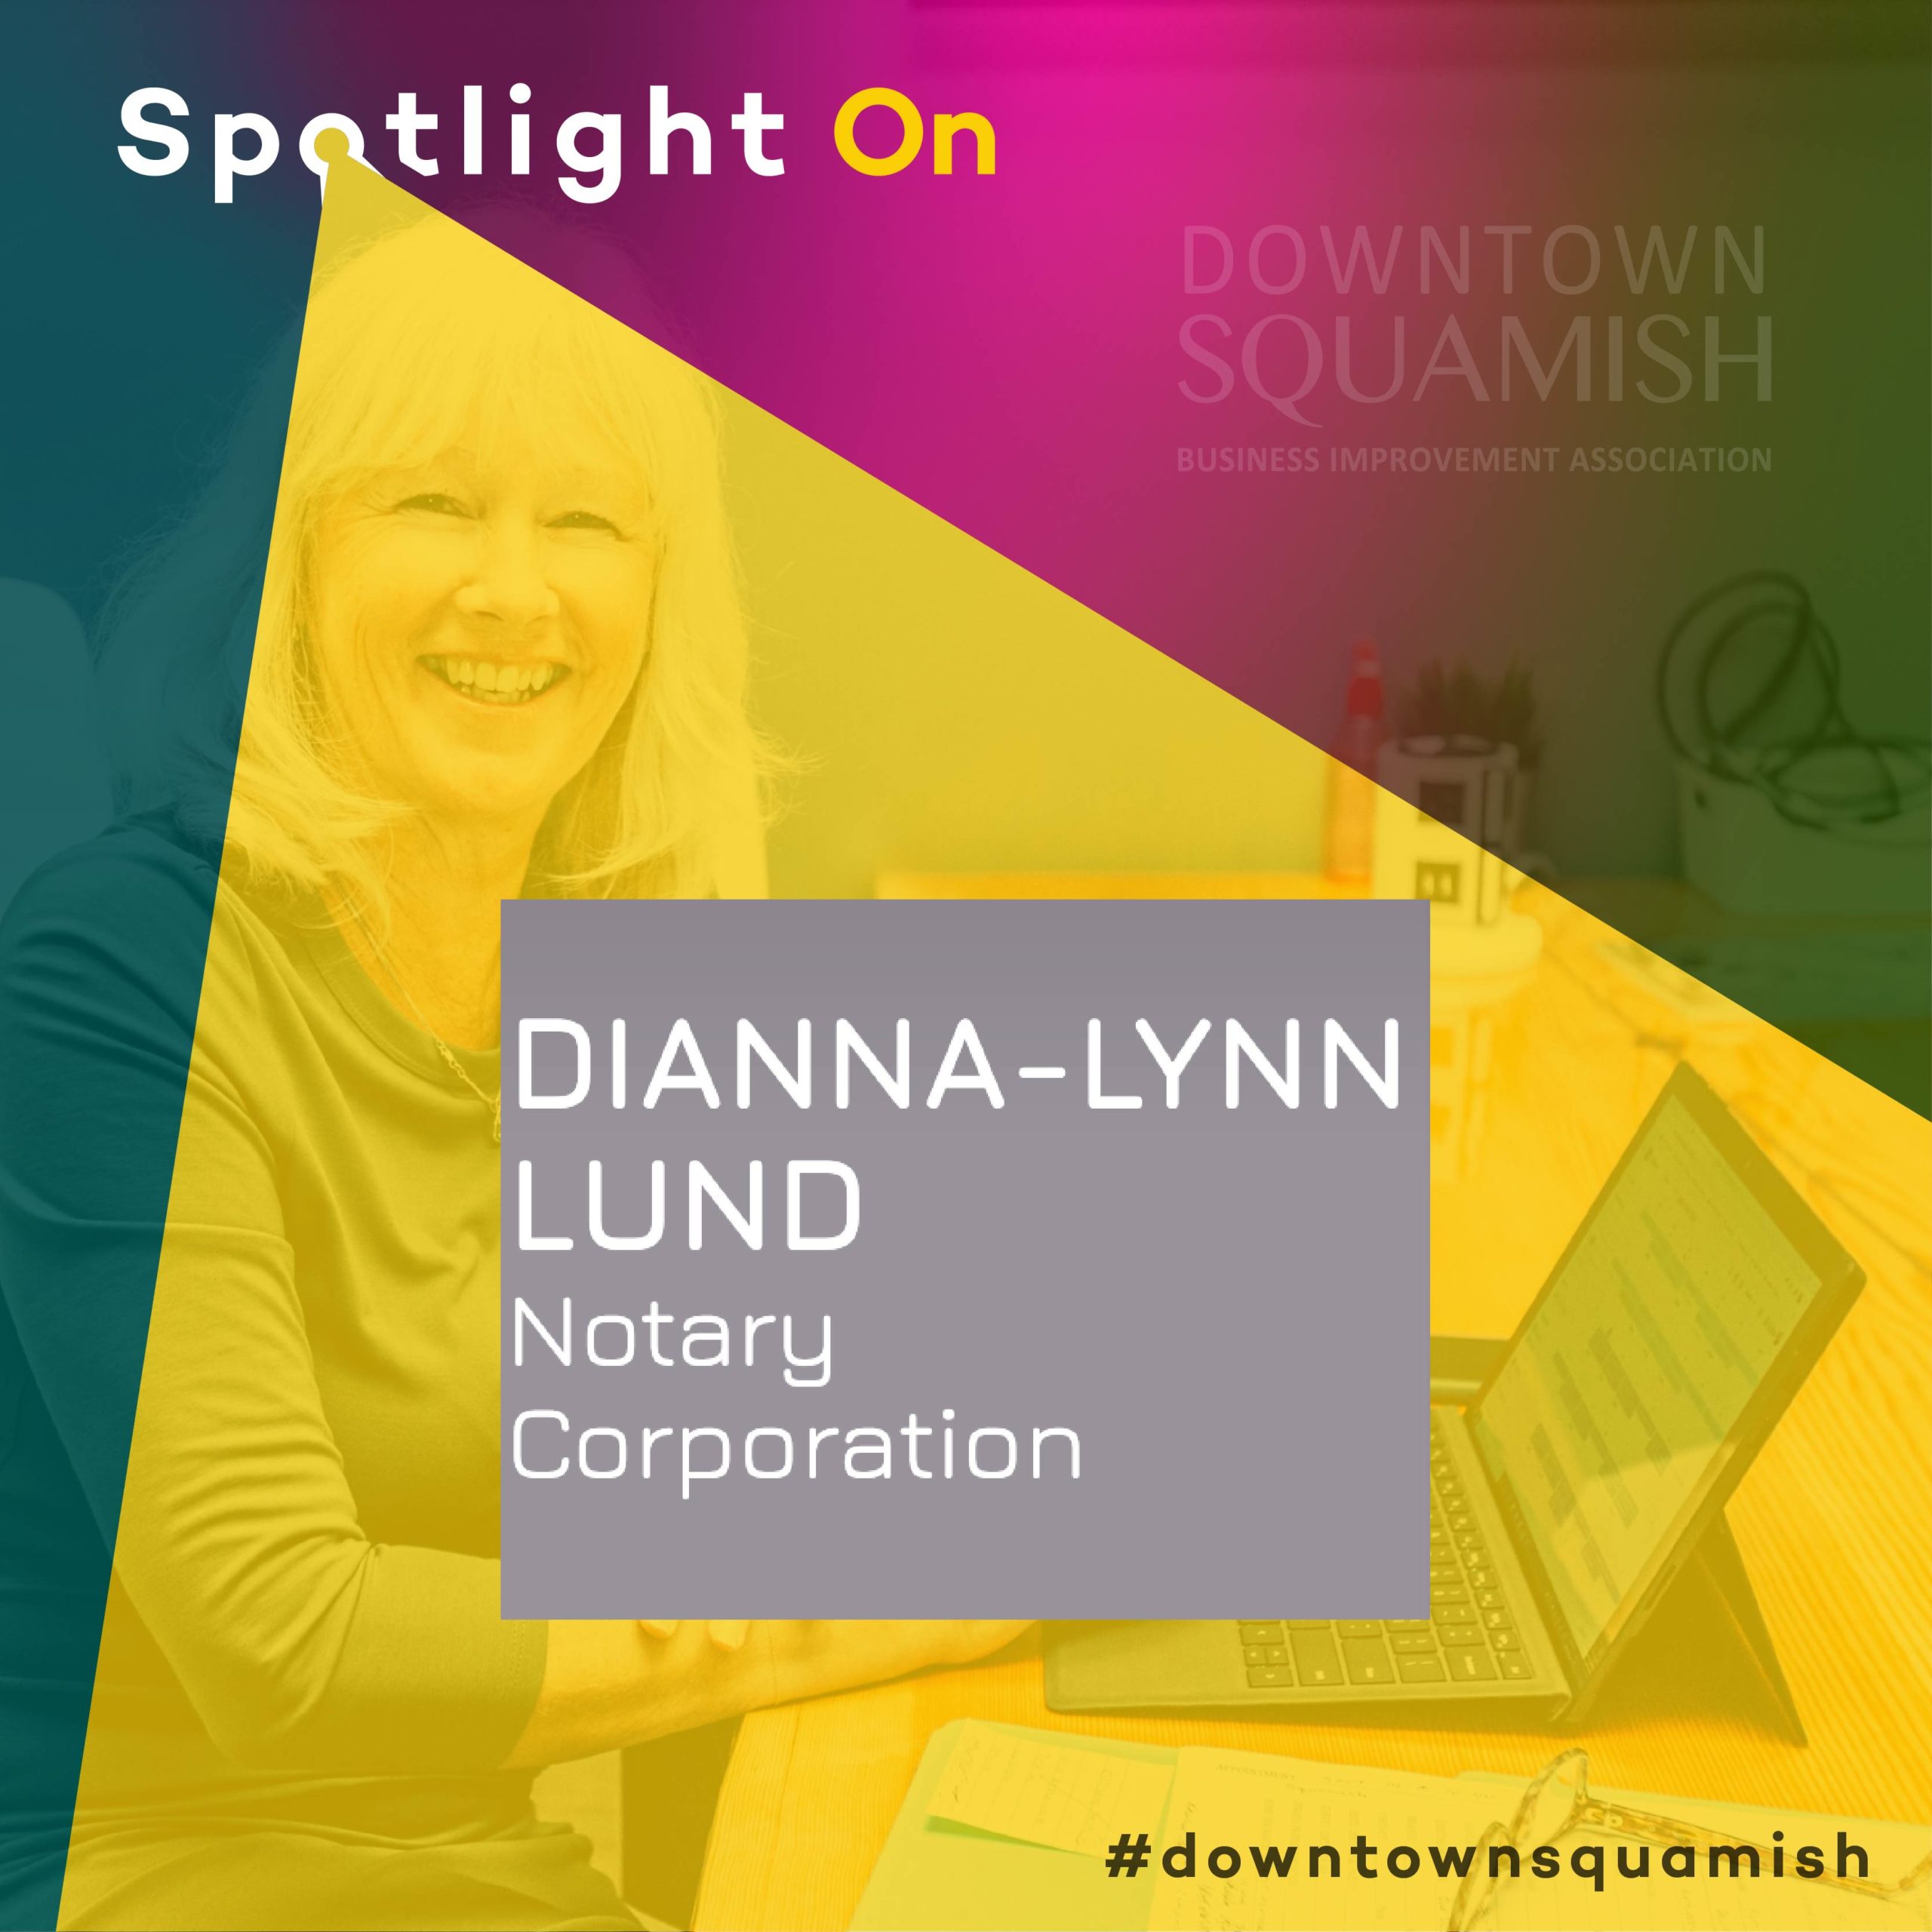 https://www.downtownsquamish.com/wp-content/uploads/2020/10/Spotlight_On_Dianna-Lynn-scaled.jpg